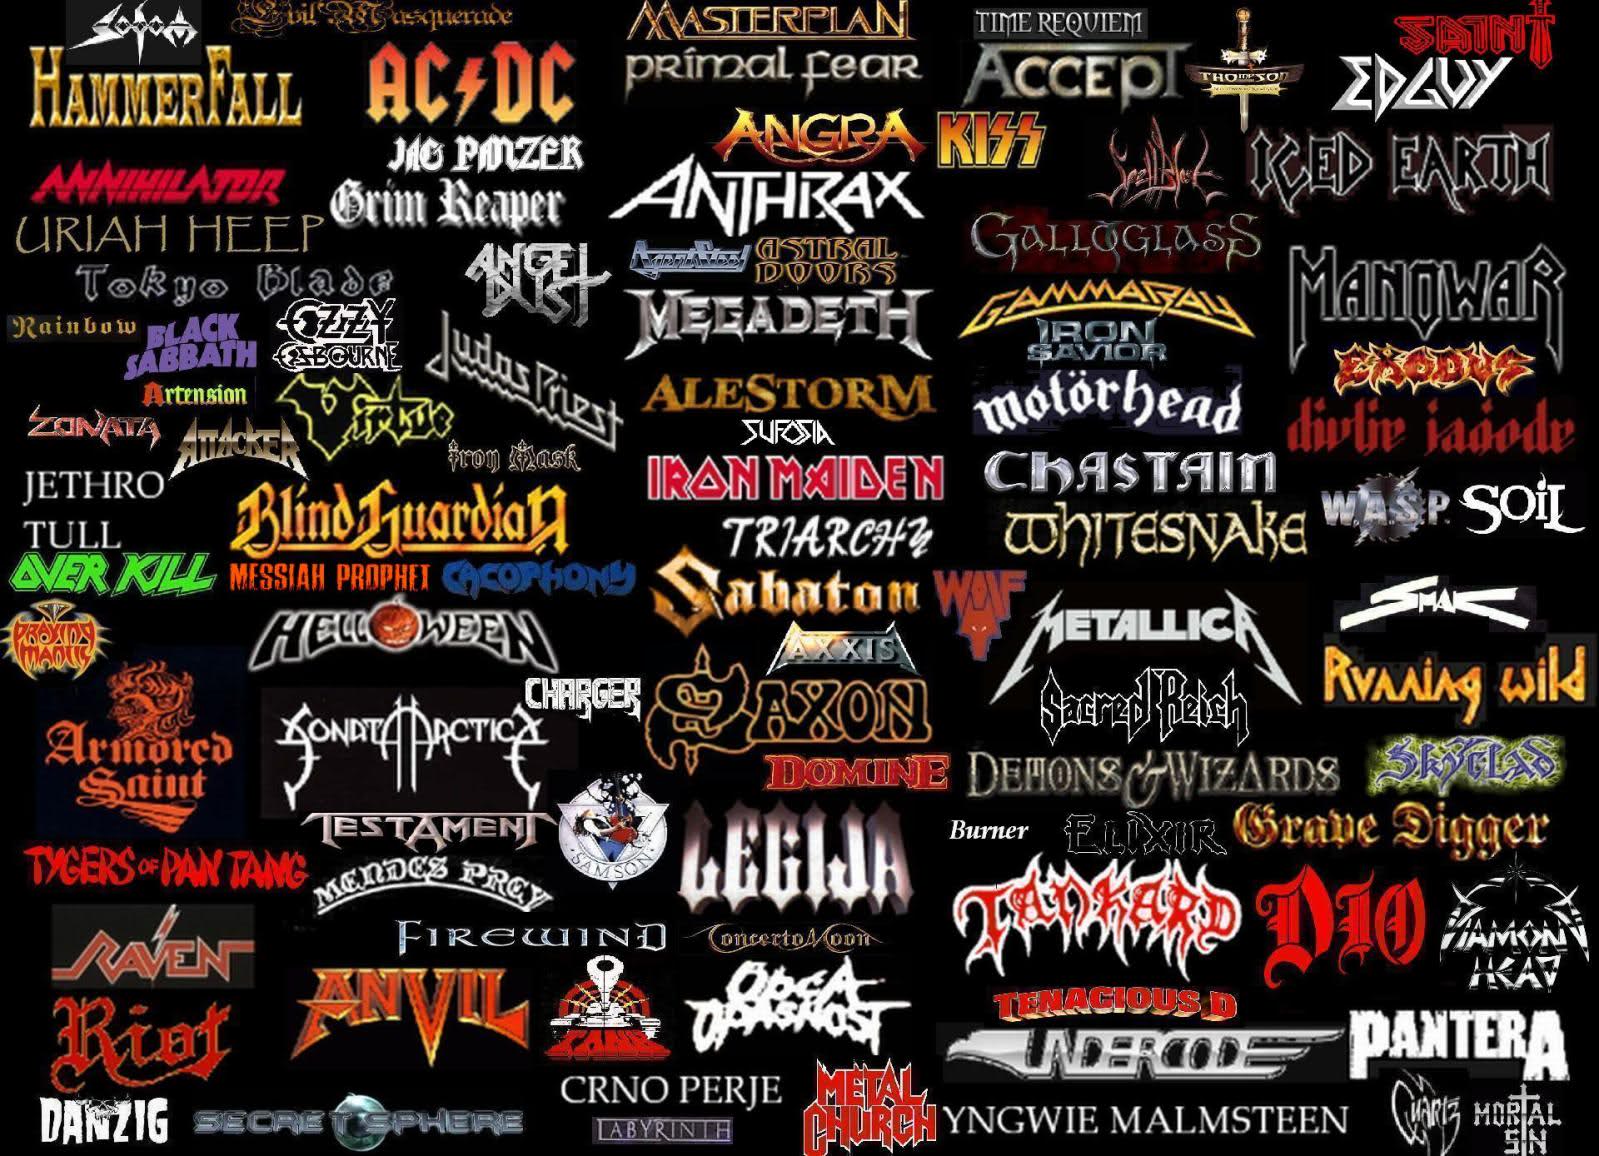 Heavy Metal Band Logo - The headbangers \m/\m/ image metal bands HD wallpaper